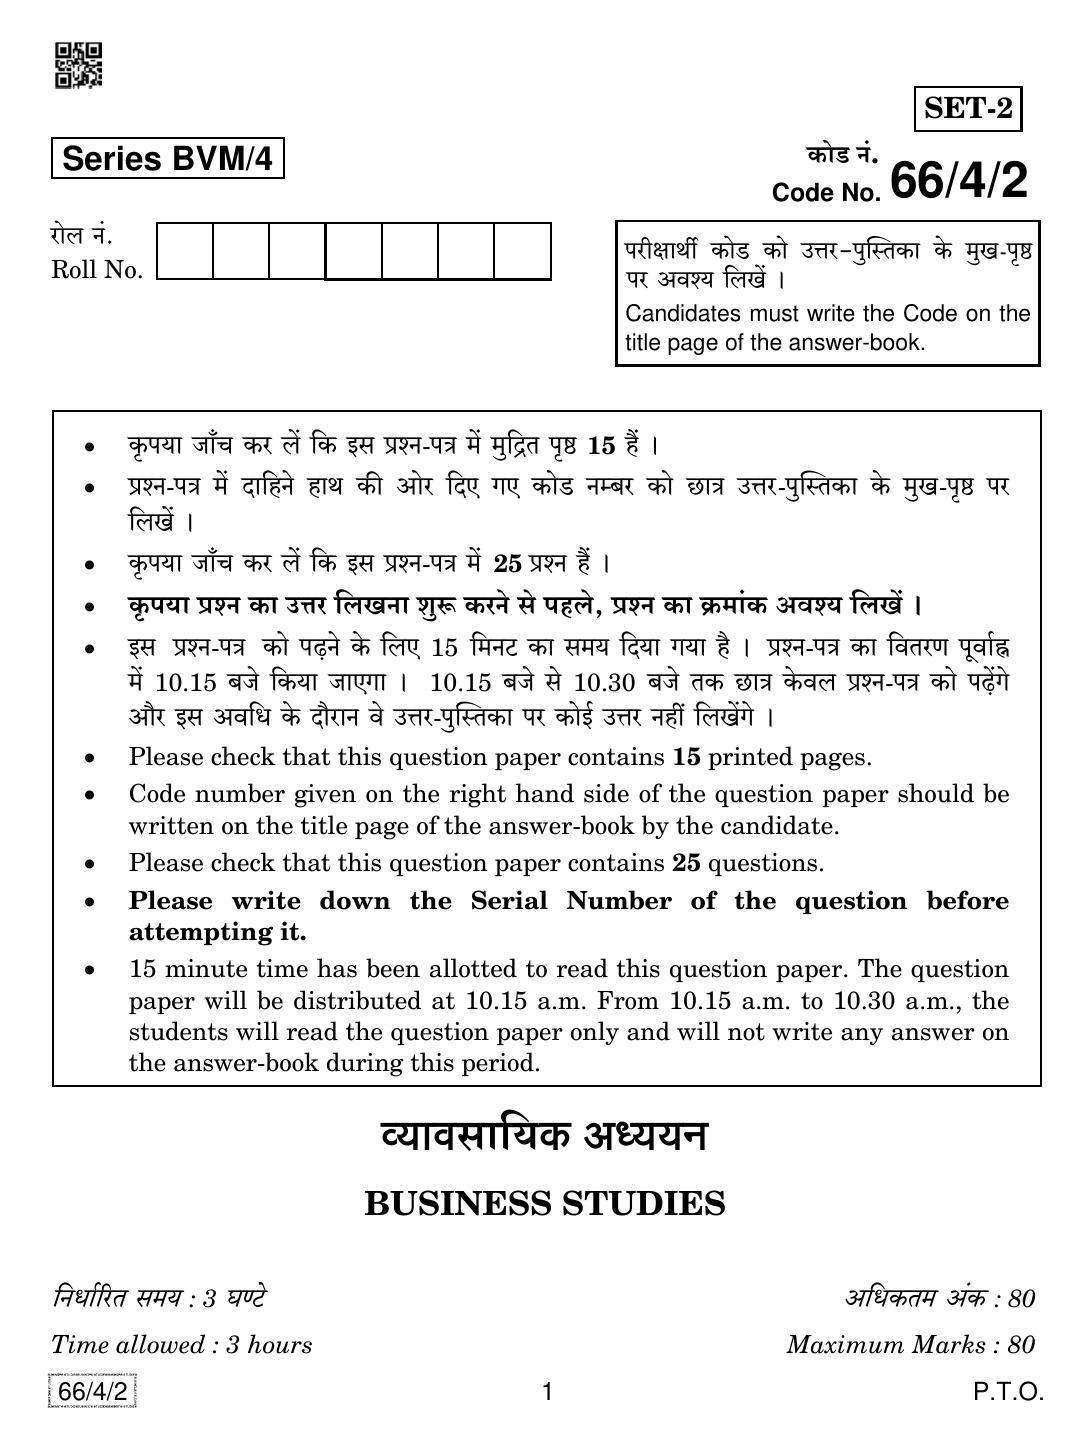 CBSE Class 12 66-4-2 Business Studies 2019 Question Paper - Page 1